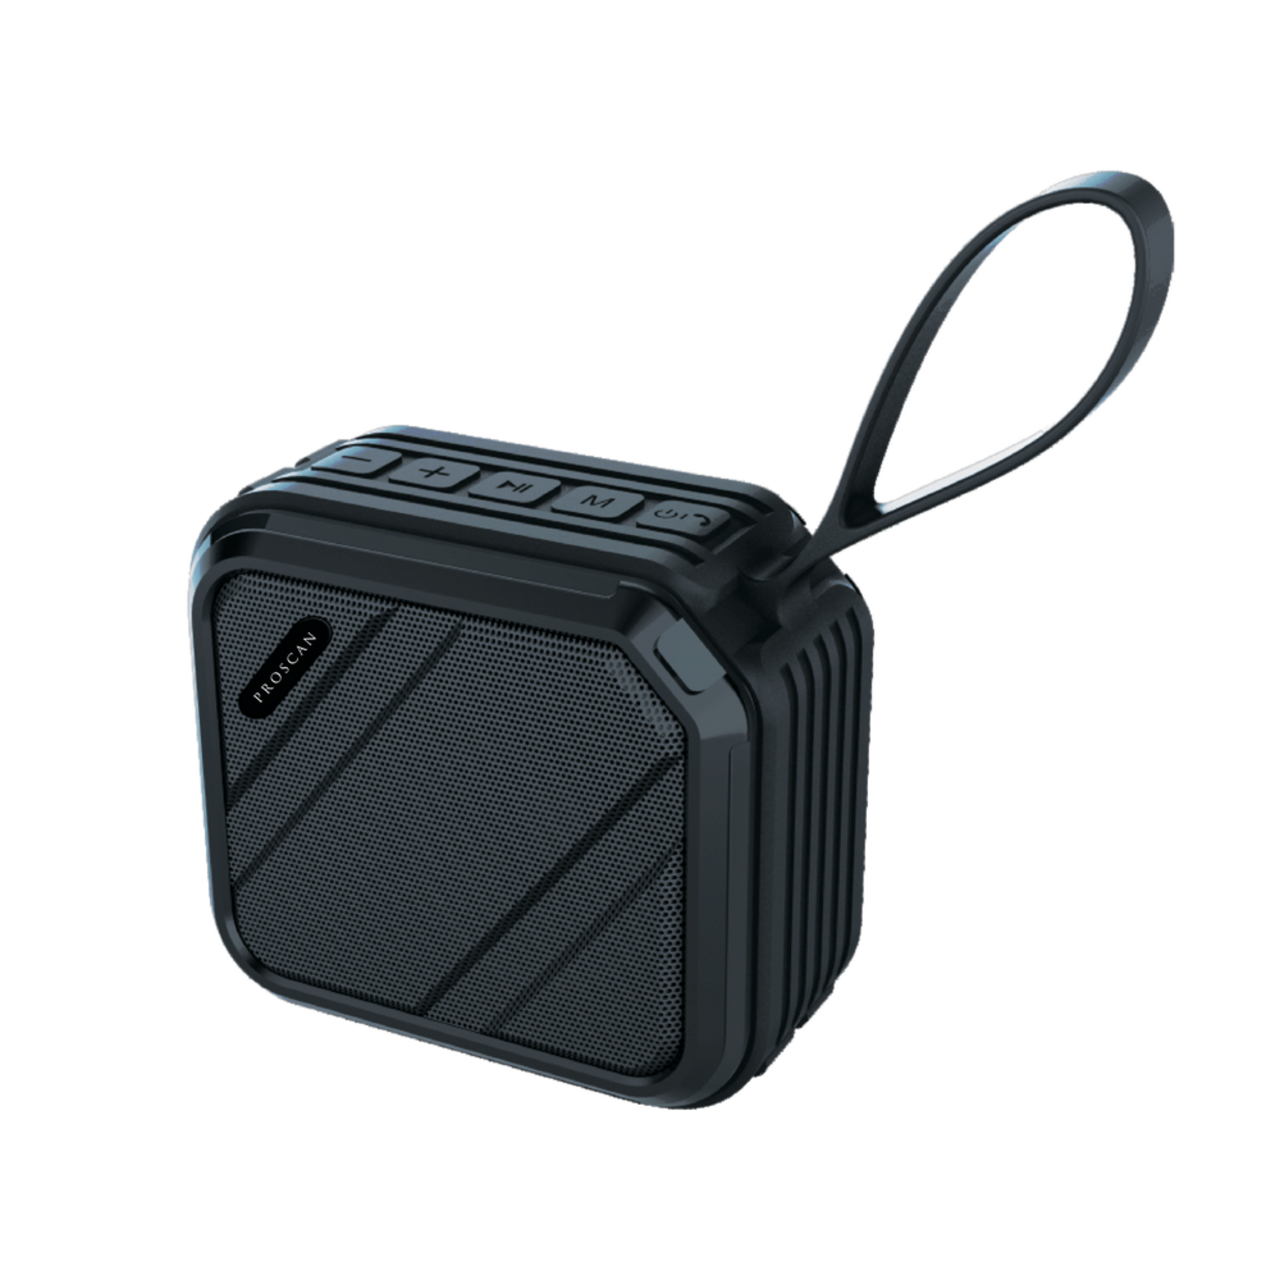 Proscan Extreme Portable Wireless Water-Resistant Bluetooth Speaker w/ FM  Radio & AUX-IN